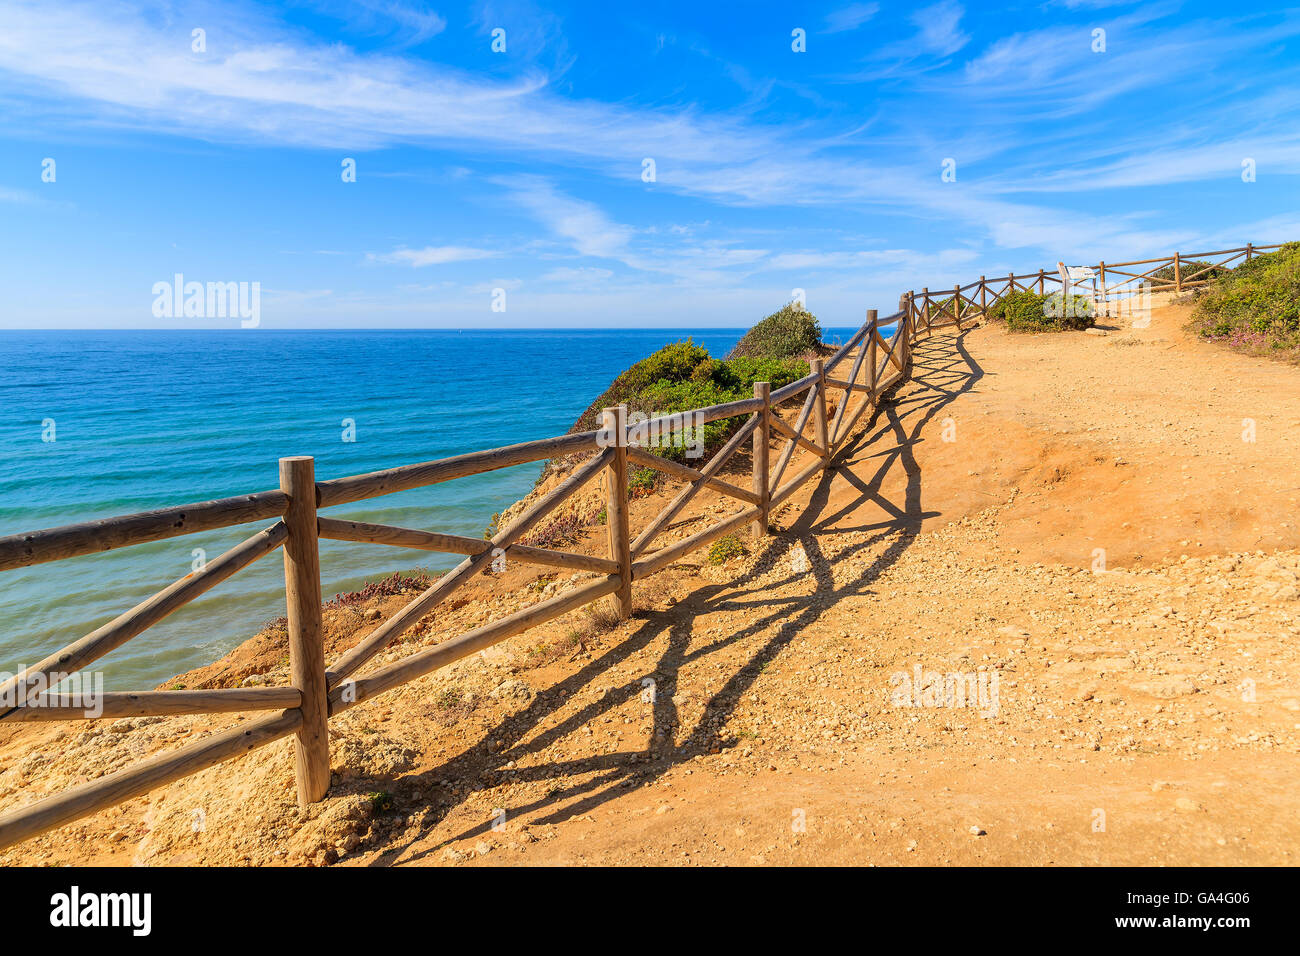 Wooden fence on cliff path on coast of Portugal in Algarve region near Praia de Marinha beach Stock Photo